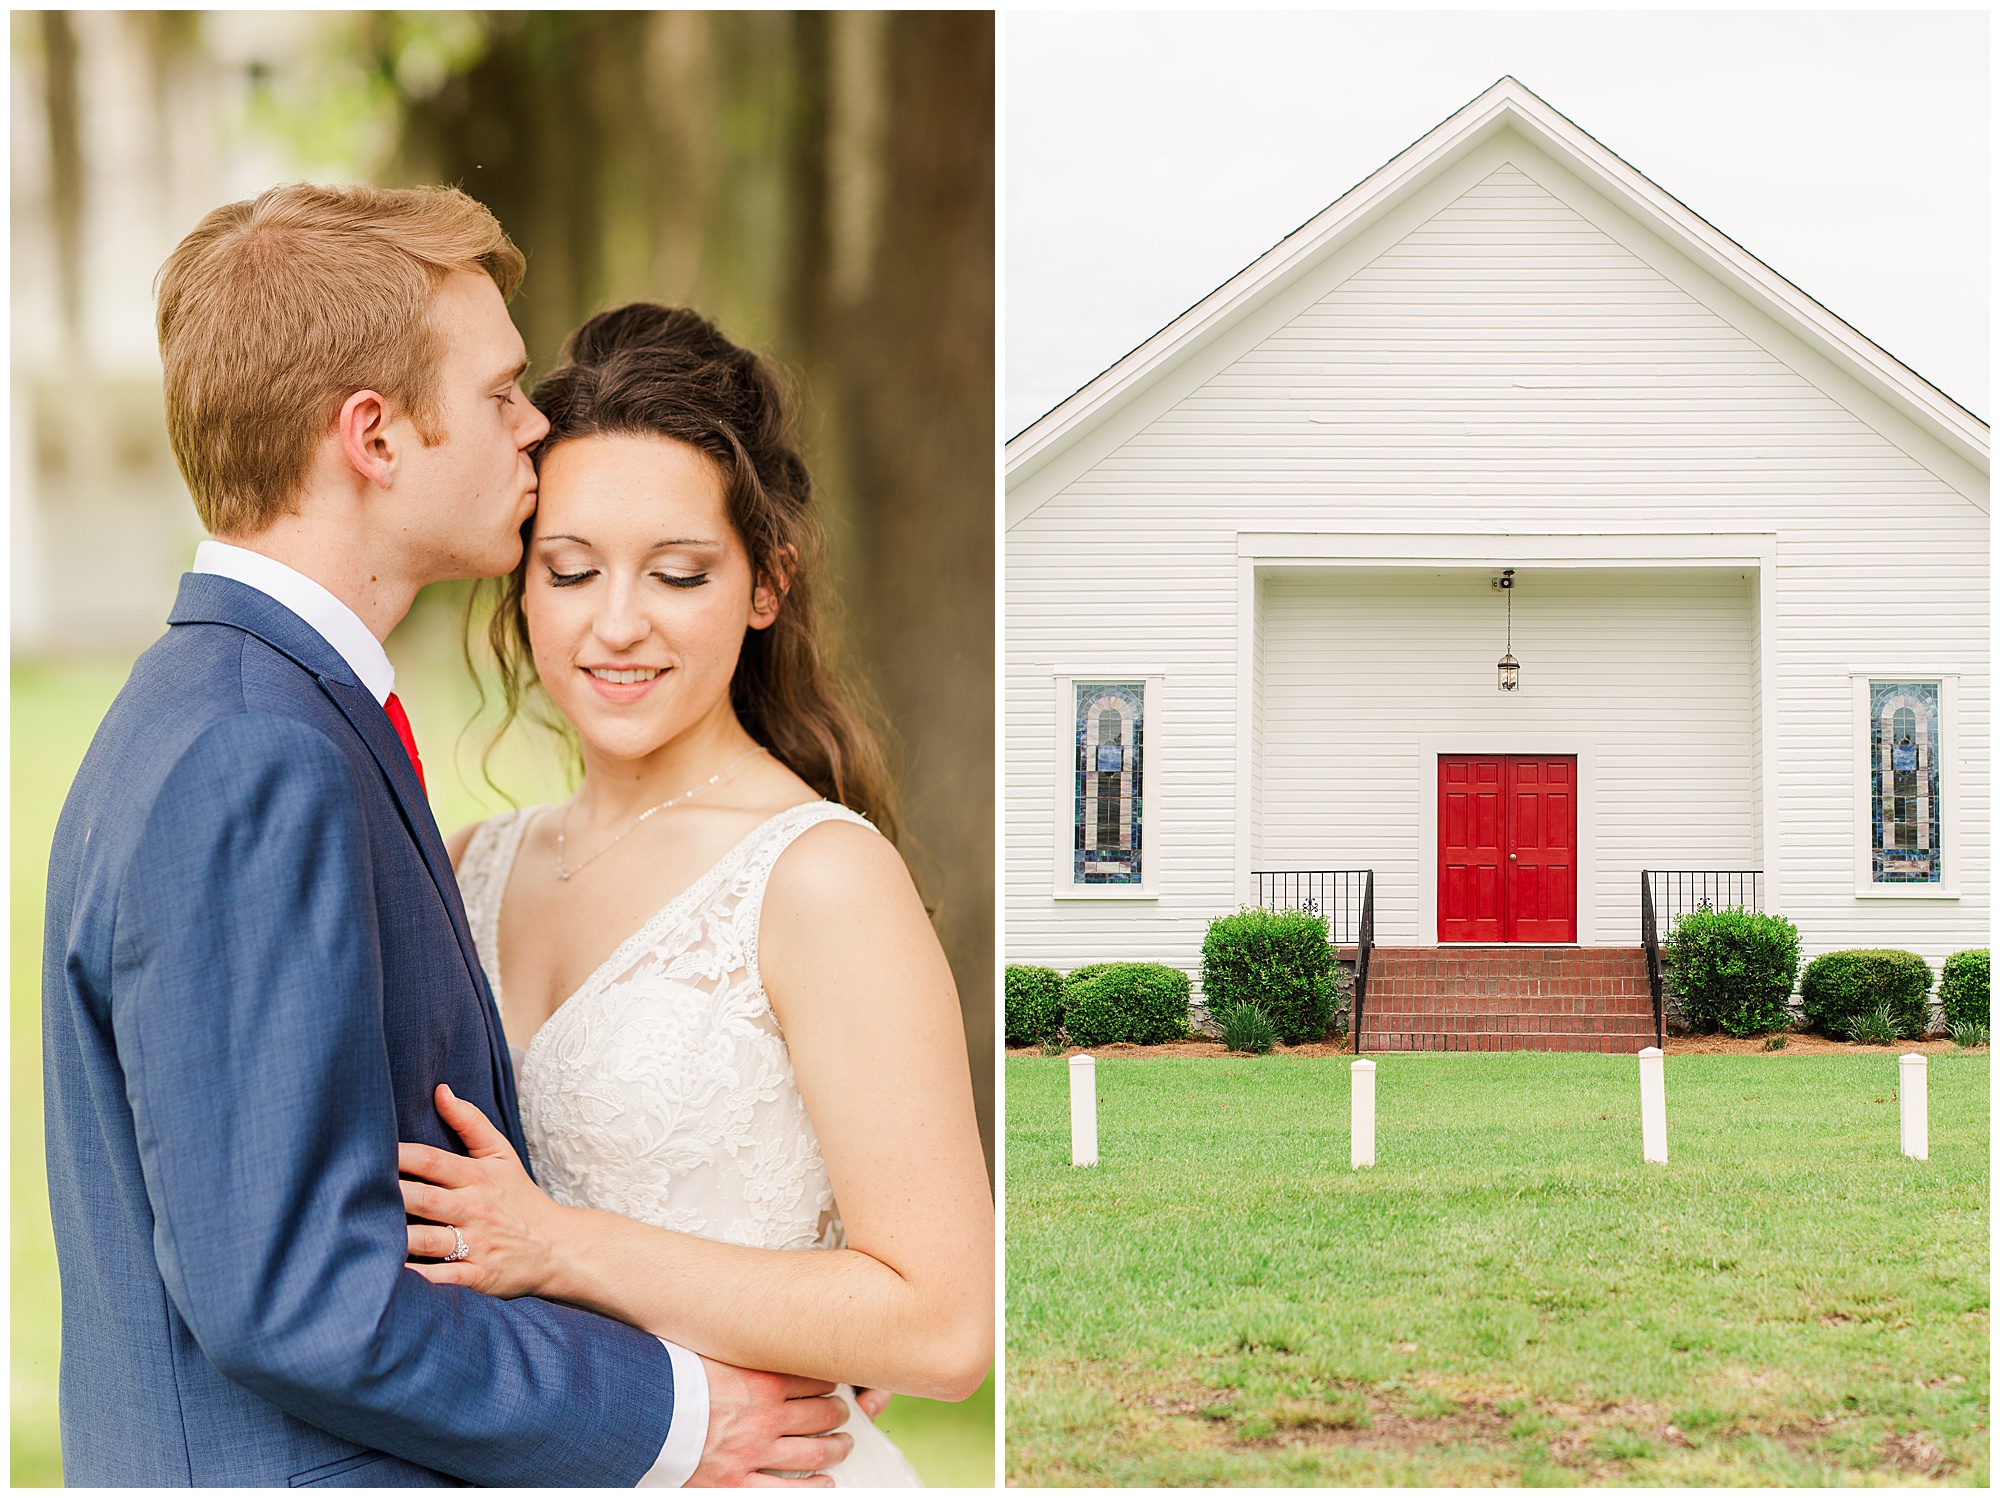 Georgia wedding, red bridesmaid dresses, red white and blue wedding, red door church, church wedding